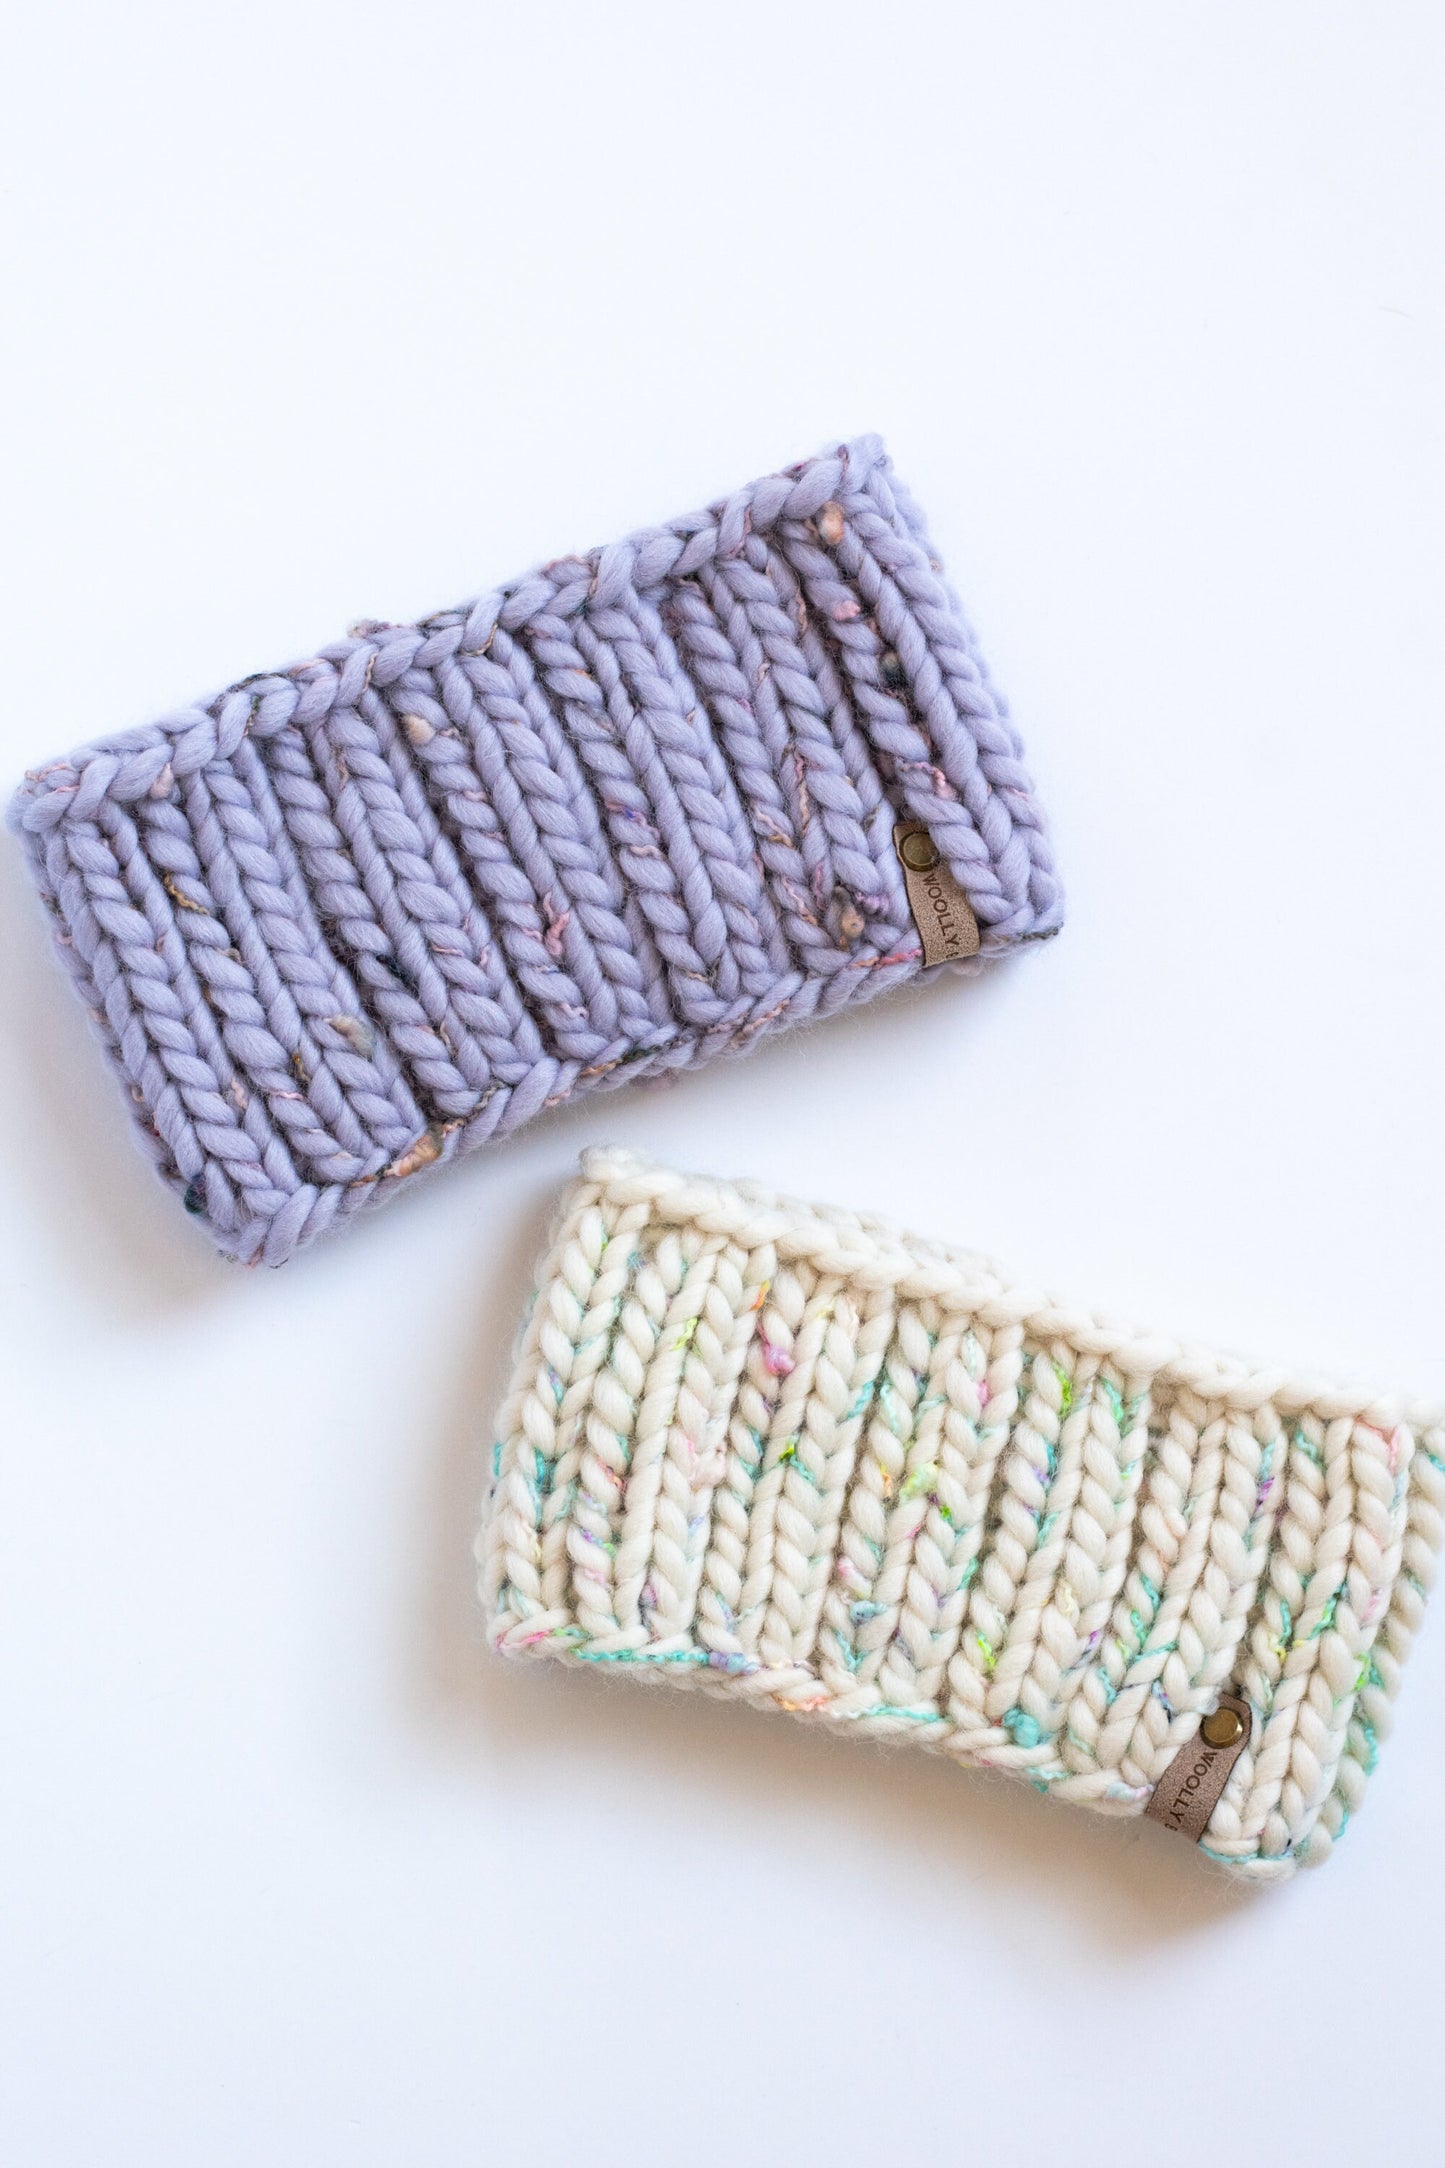 KNITTING PATTERN: Wildwood Headband, Easy Ribbed Knit Headband/Earwarmer Knitting Pattern for Super Bulky Yarn